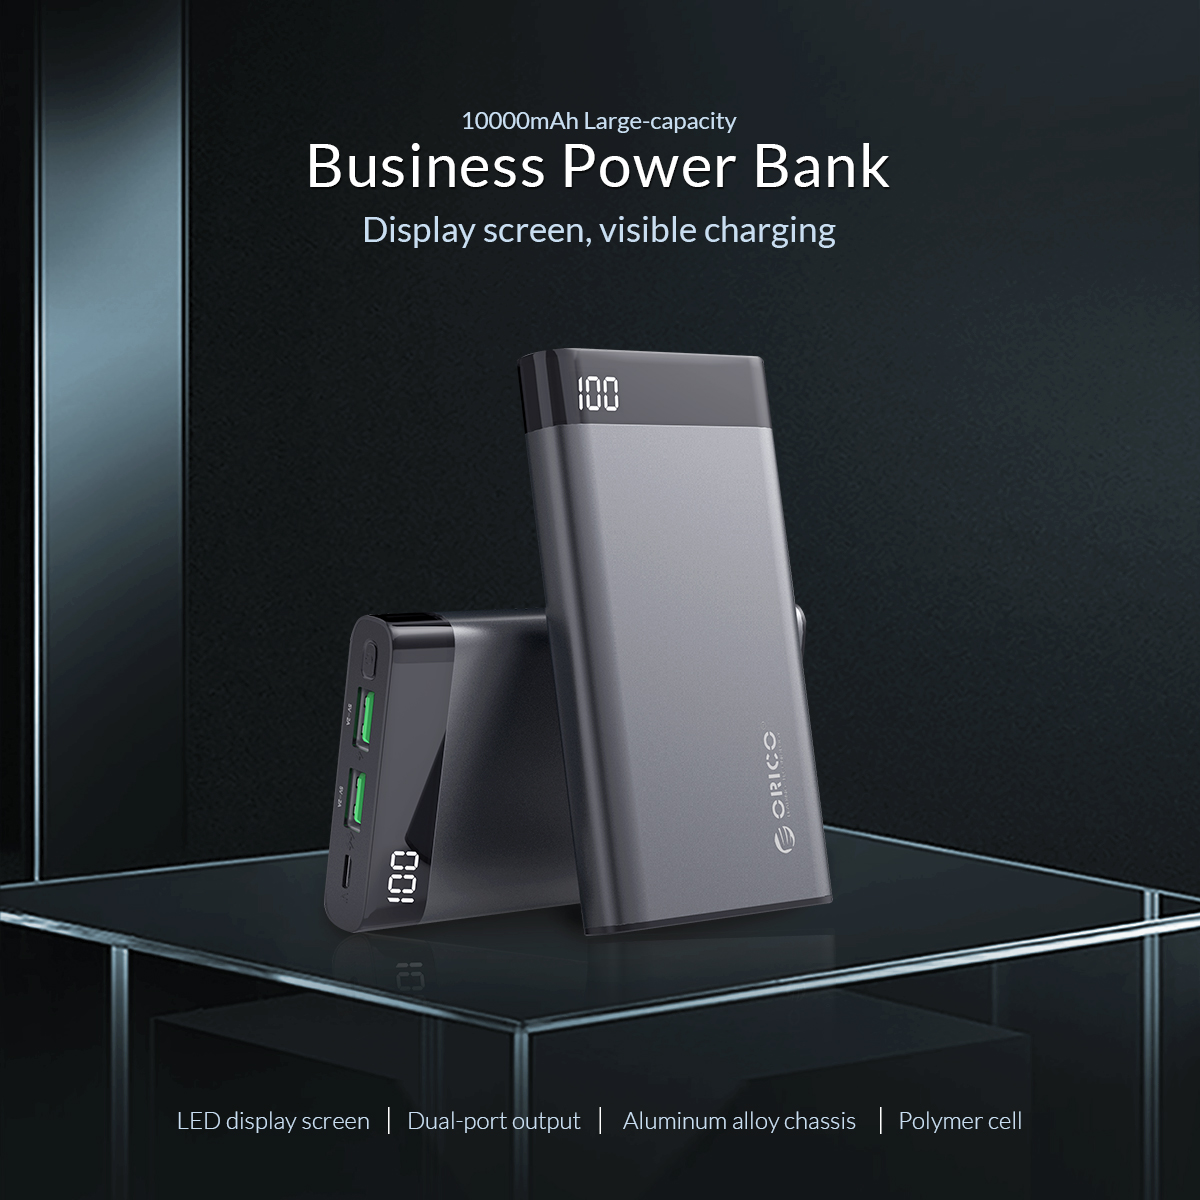 Business Power bank display screen visible charging